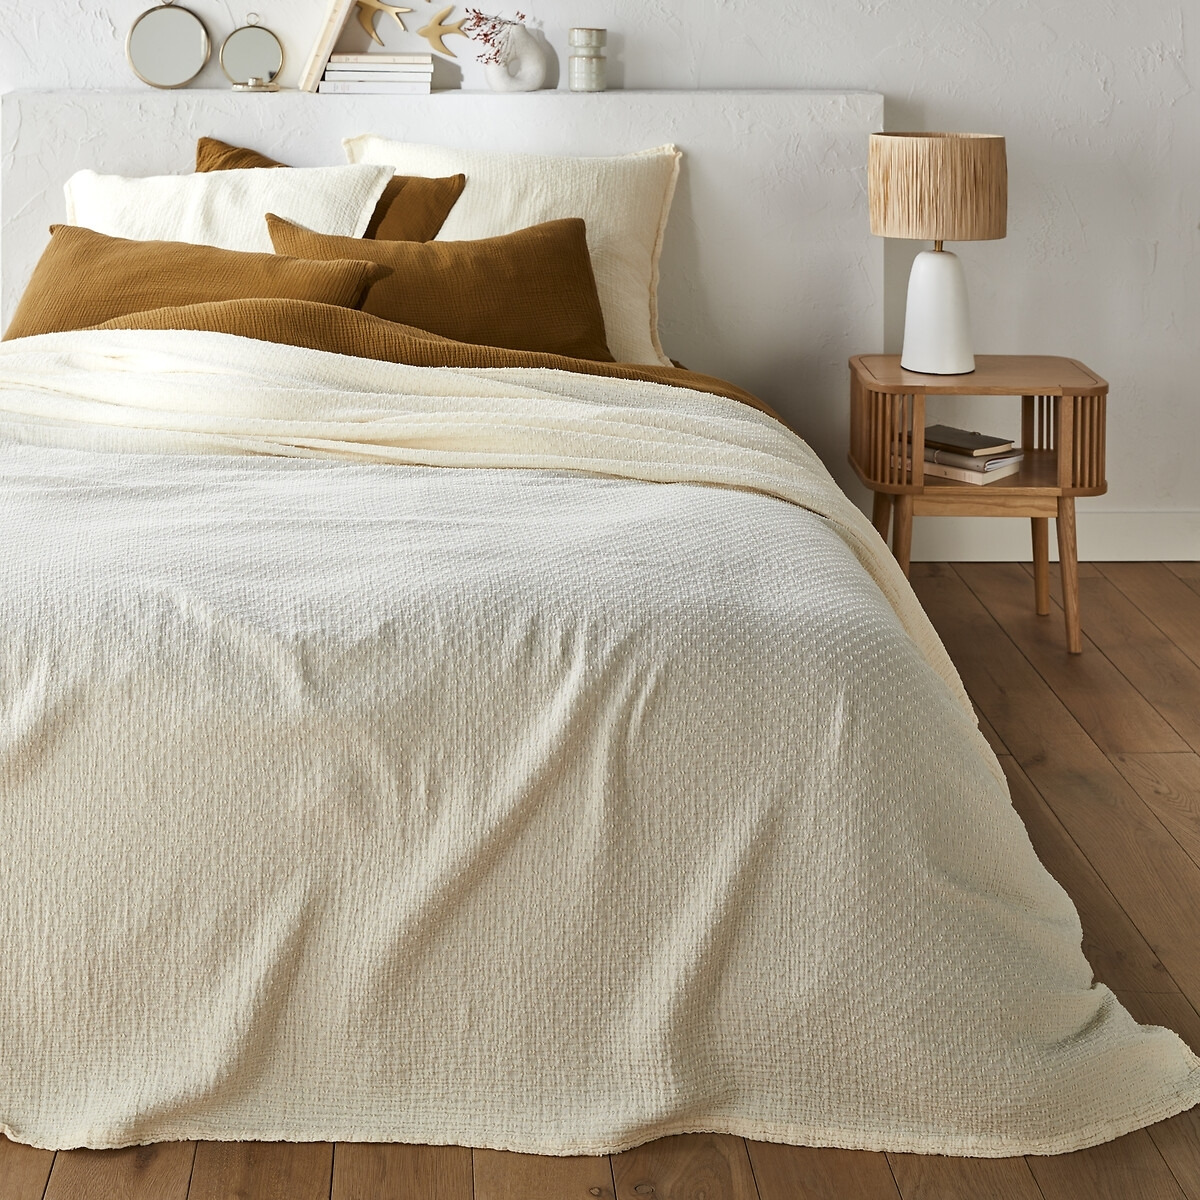 Plumetis Swiss Dot 100% Cotton Muslin Bedspread - image 1